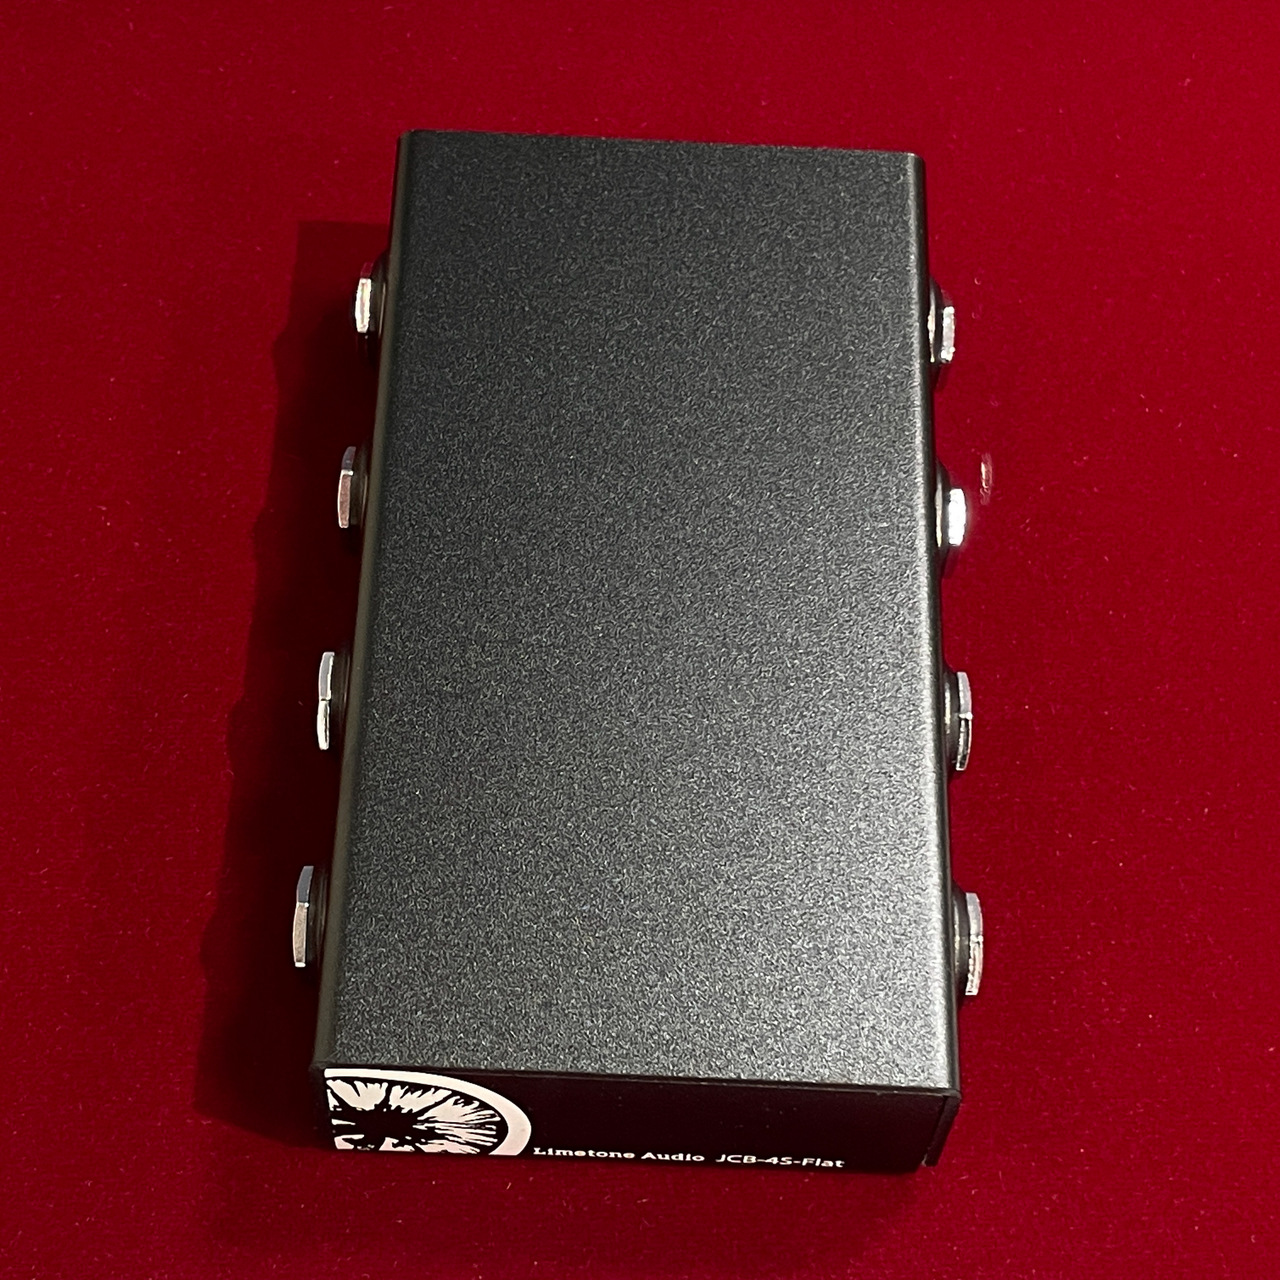 Limetone Audio ジャンクションボックス JCB-4S-Flat - エフェクター